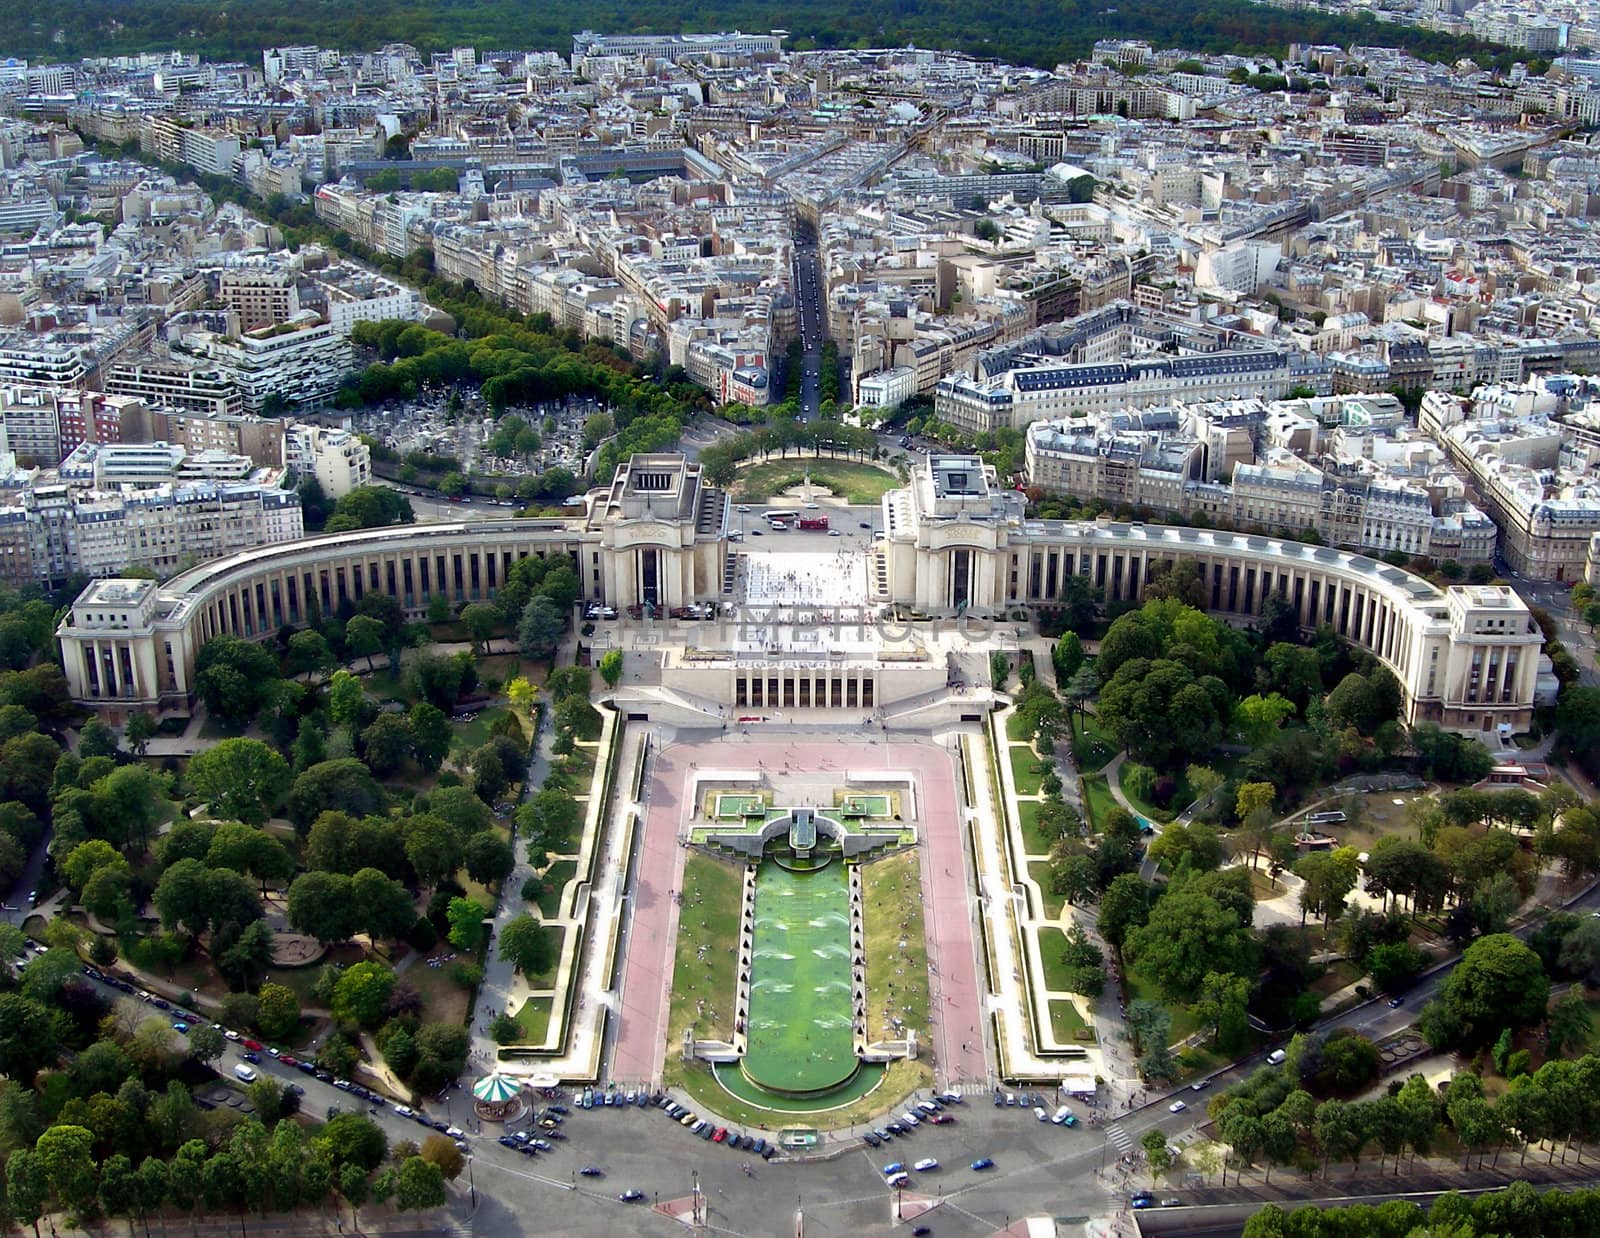 Palais de Chaillot - Trocadero in Paris by drakodav